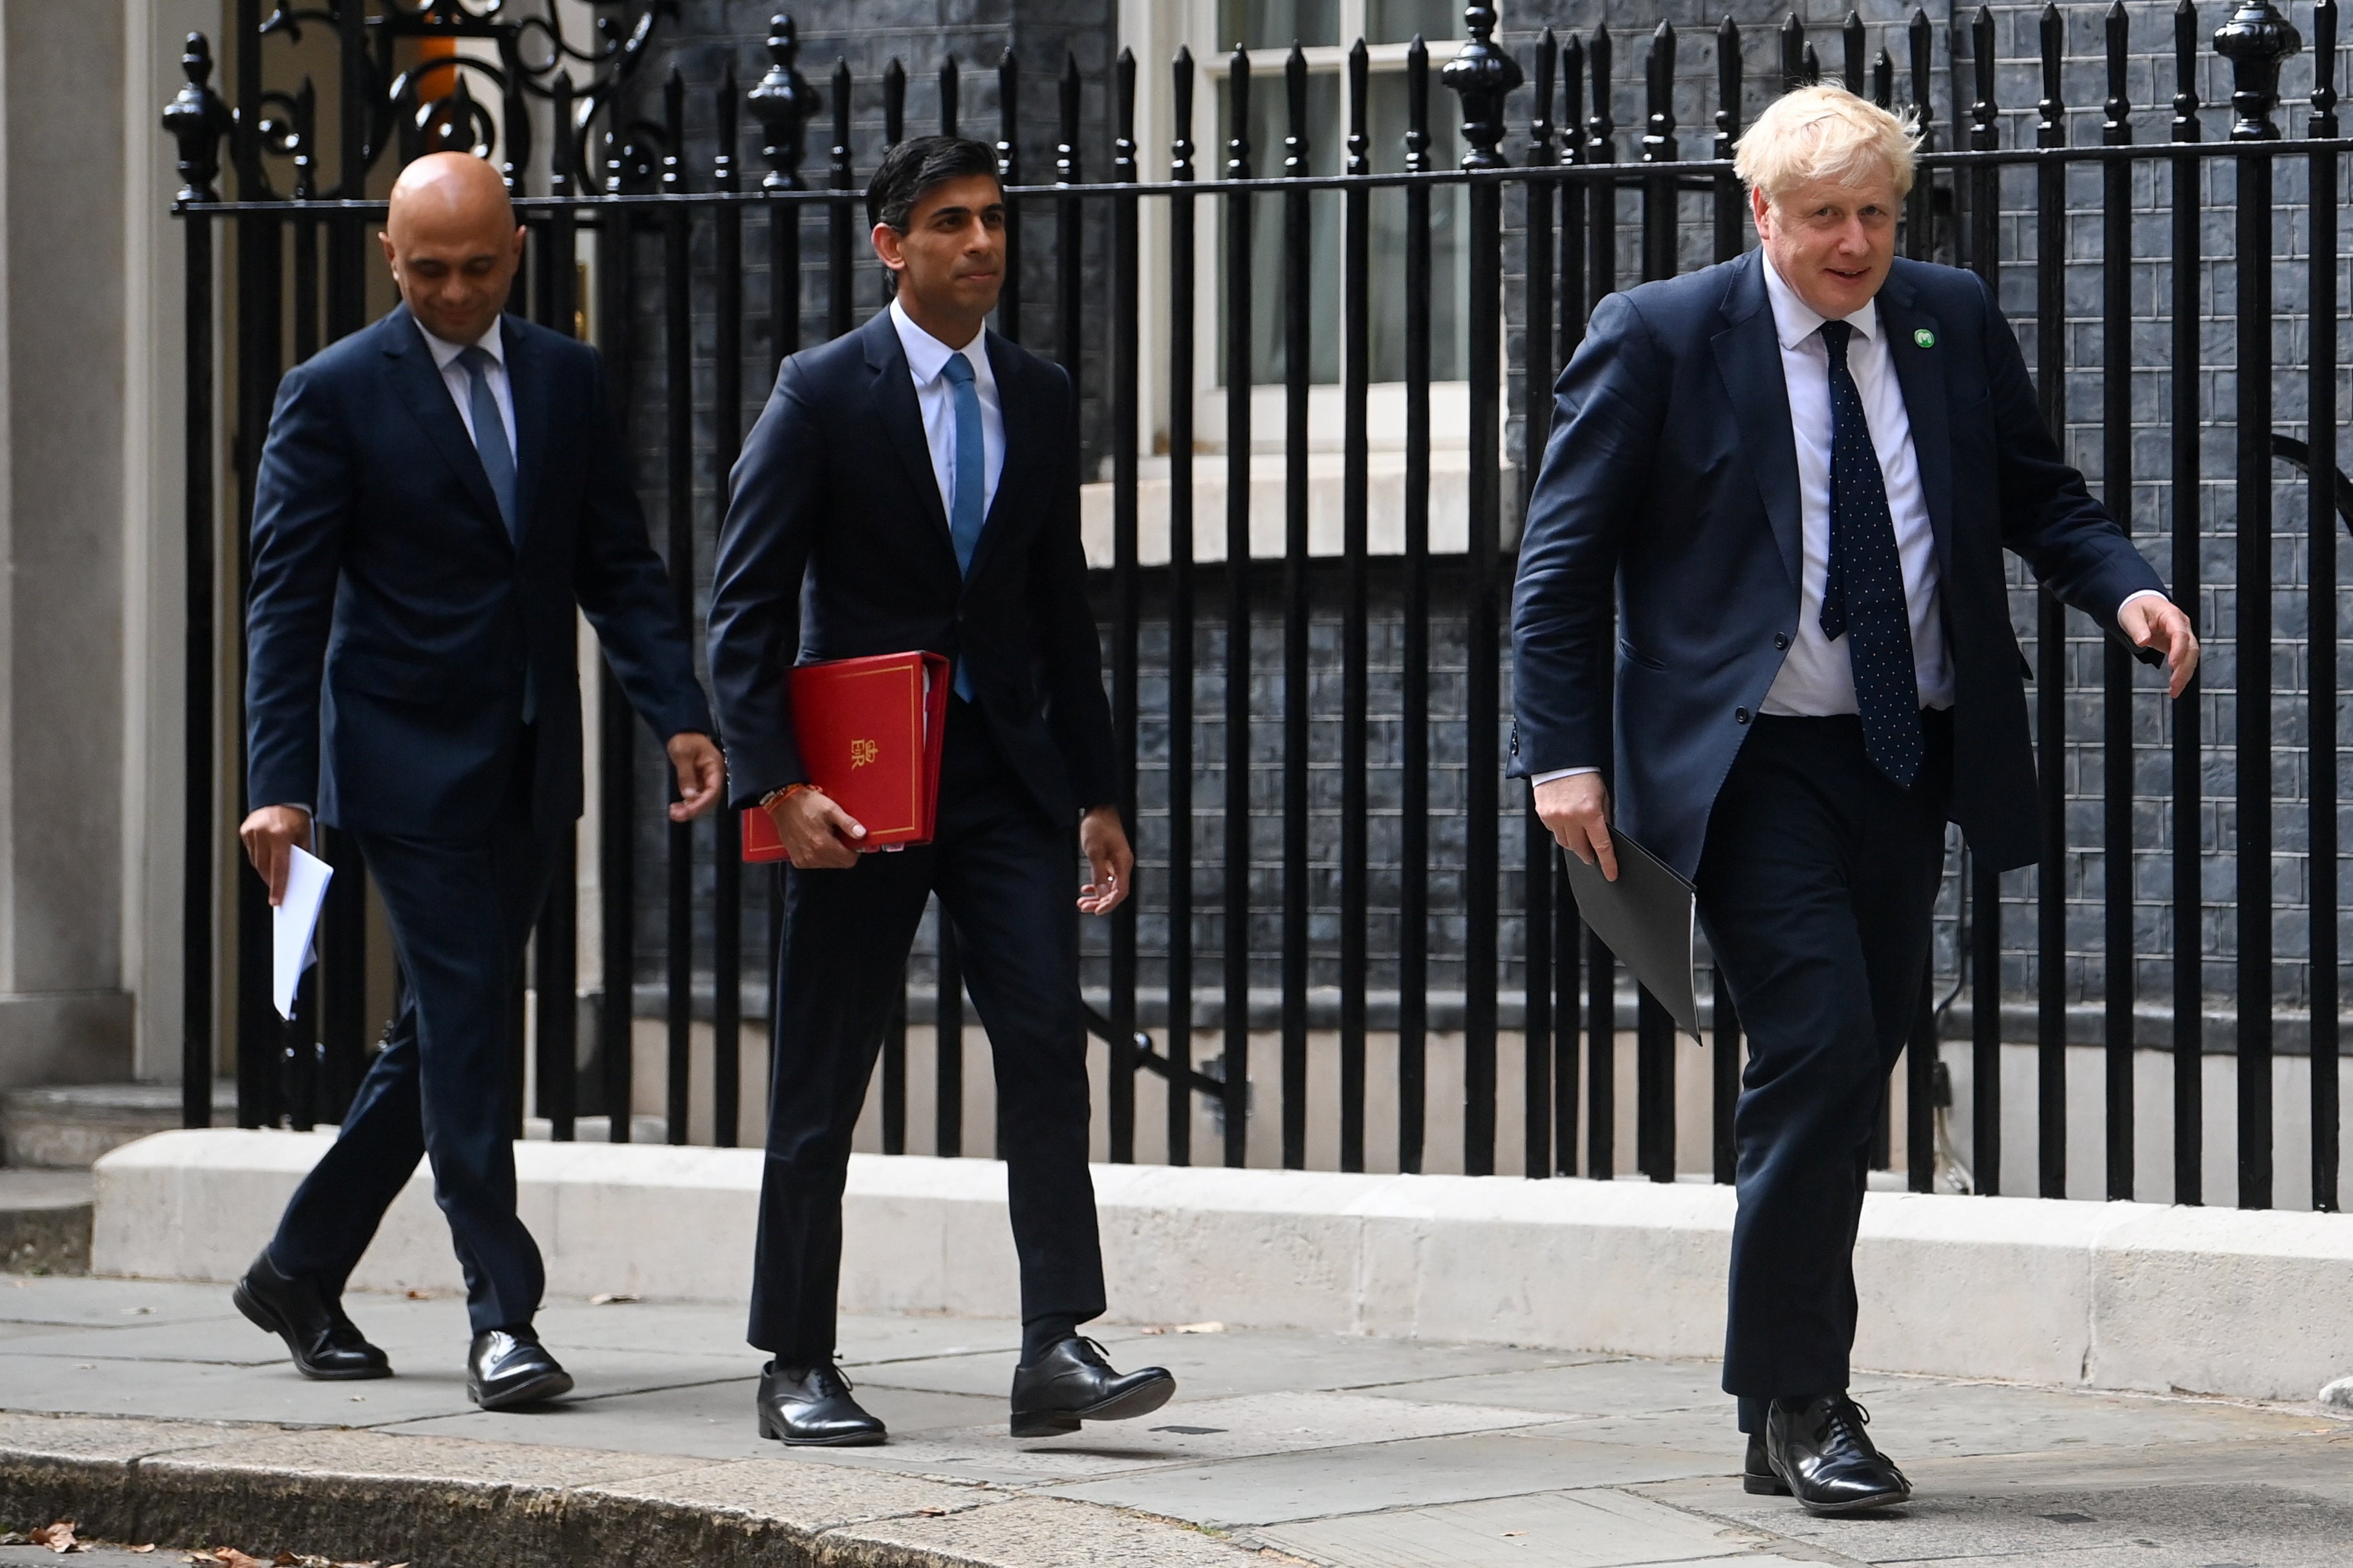 Health secretary Sajid Javid and chancellor Rishi Sunak with prime minister Boris Johnson